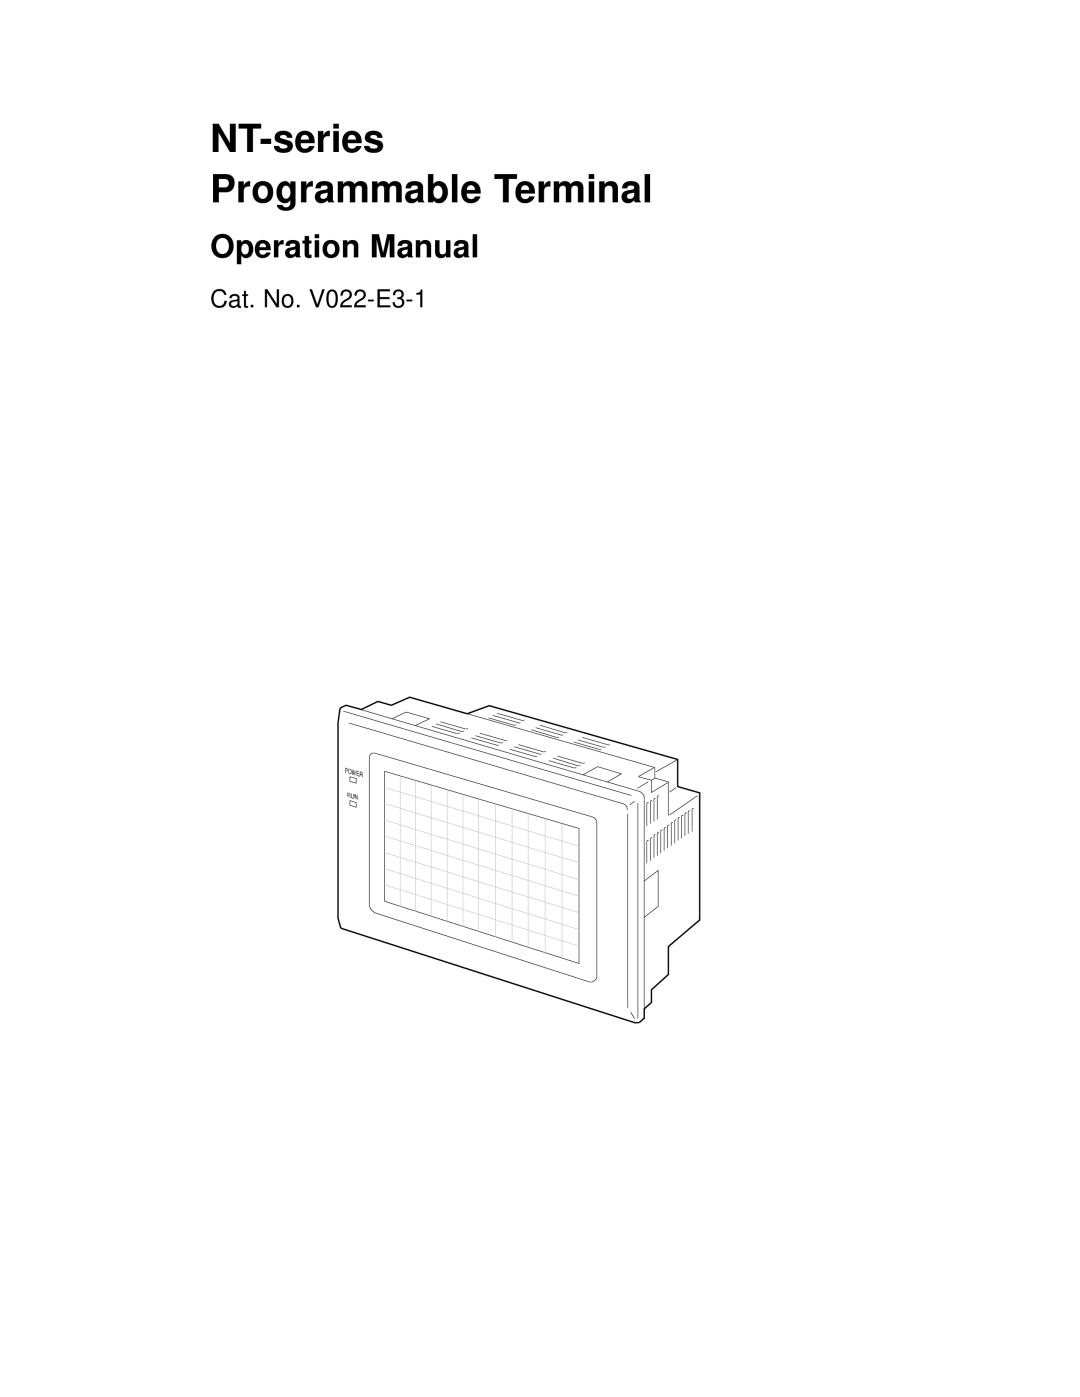 Omron operation manual NT-seriesProgrammable Terminal, Operation Manual, Cat. No. V022-E3-1 